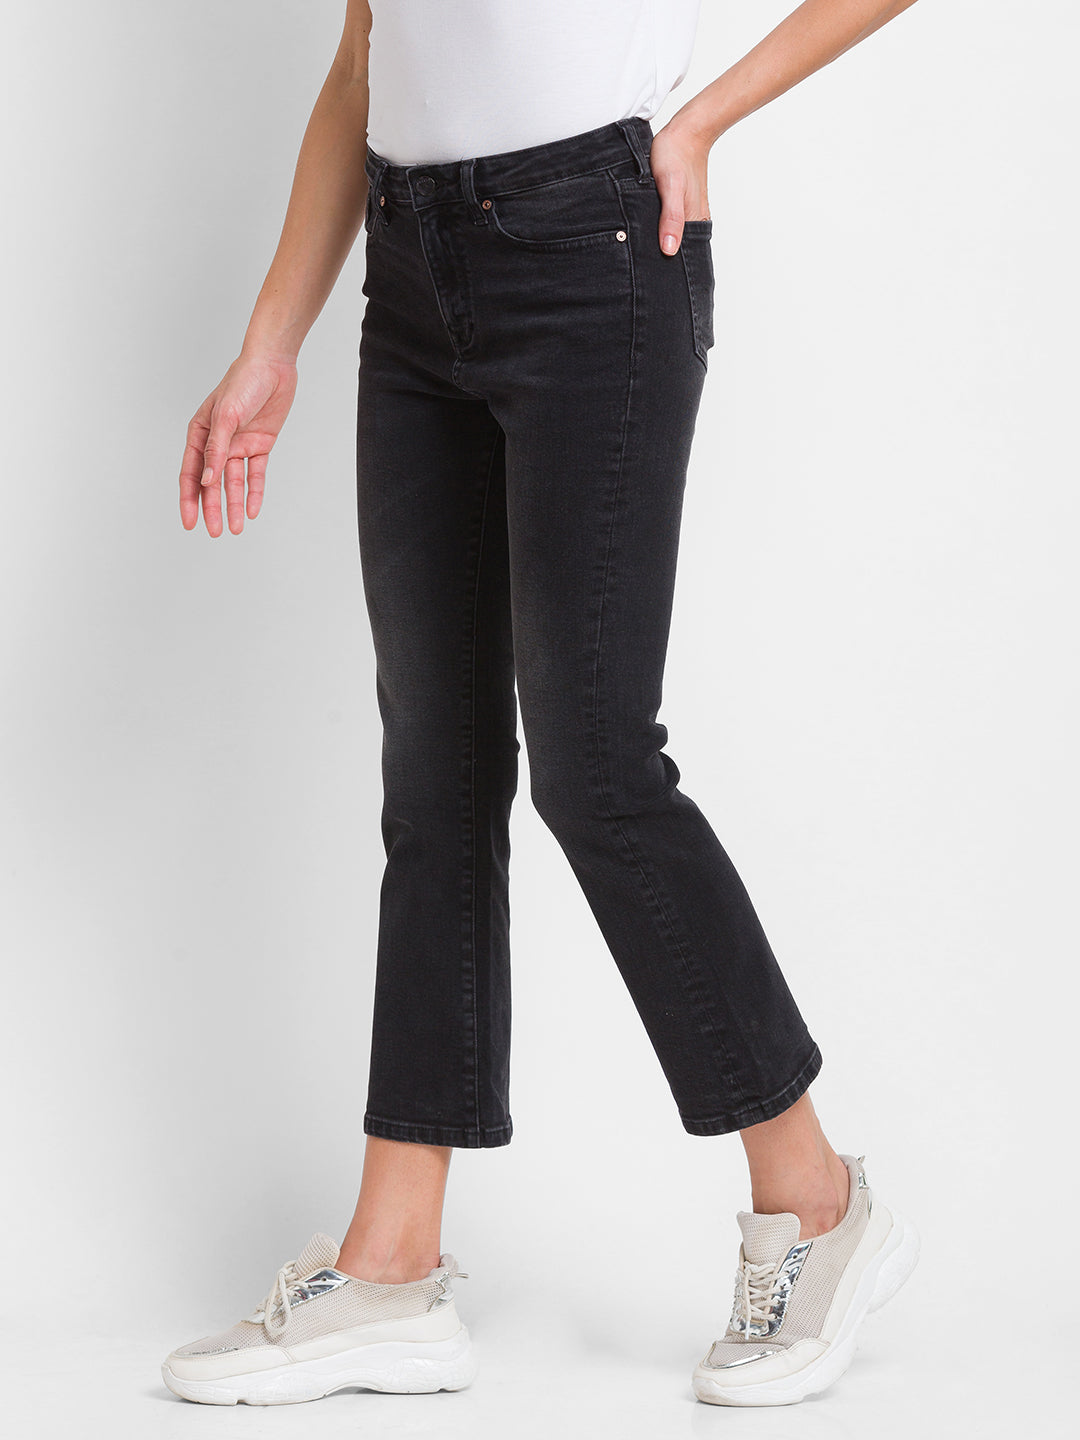 Spykar Black Lycra Flare Fit Ankle Length Jeans For Women (Elissa)